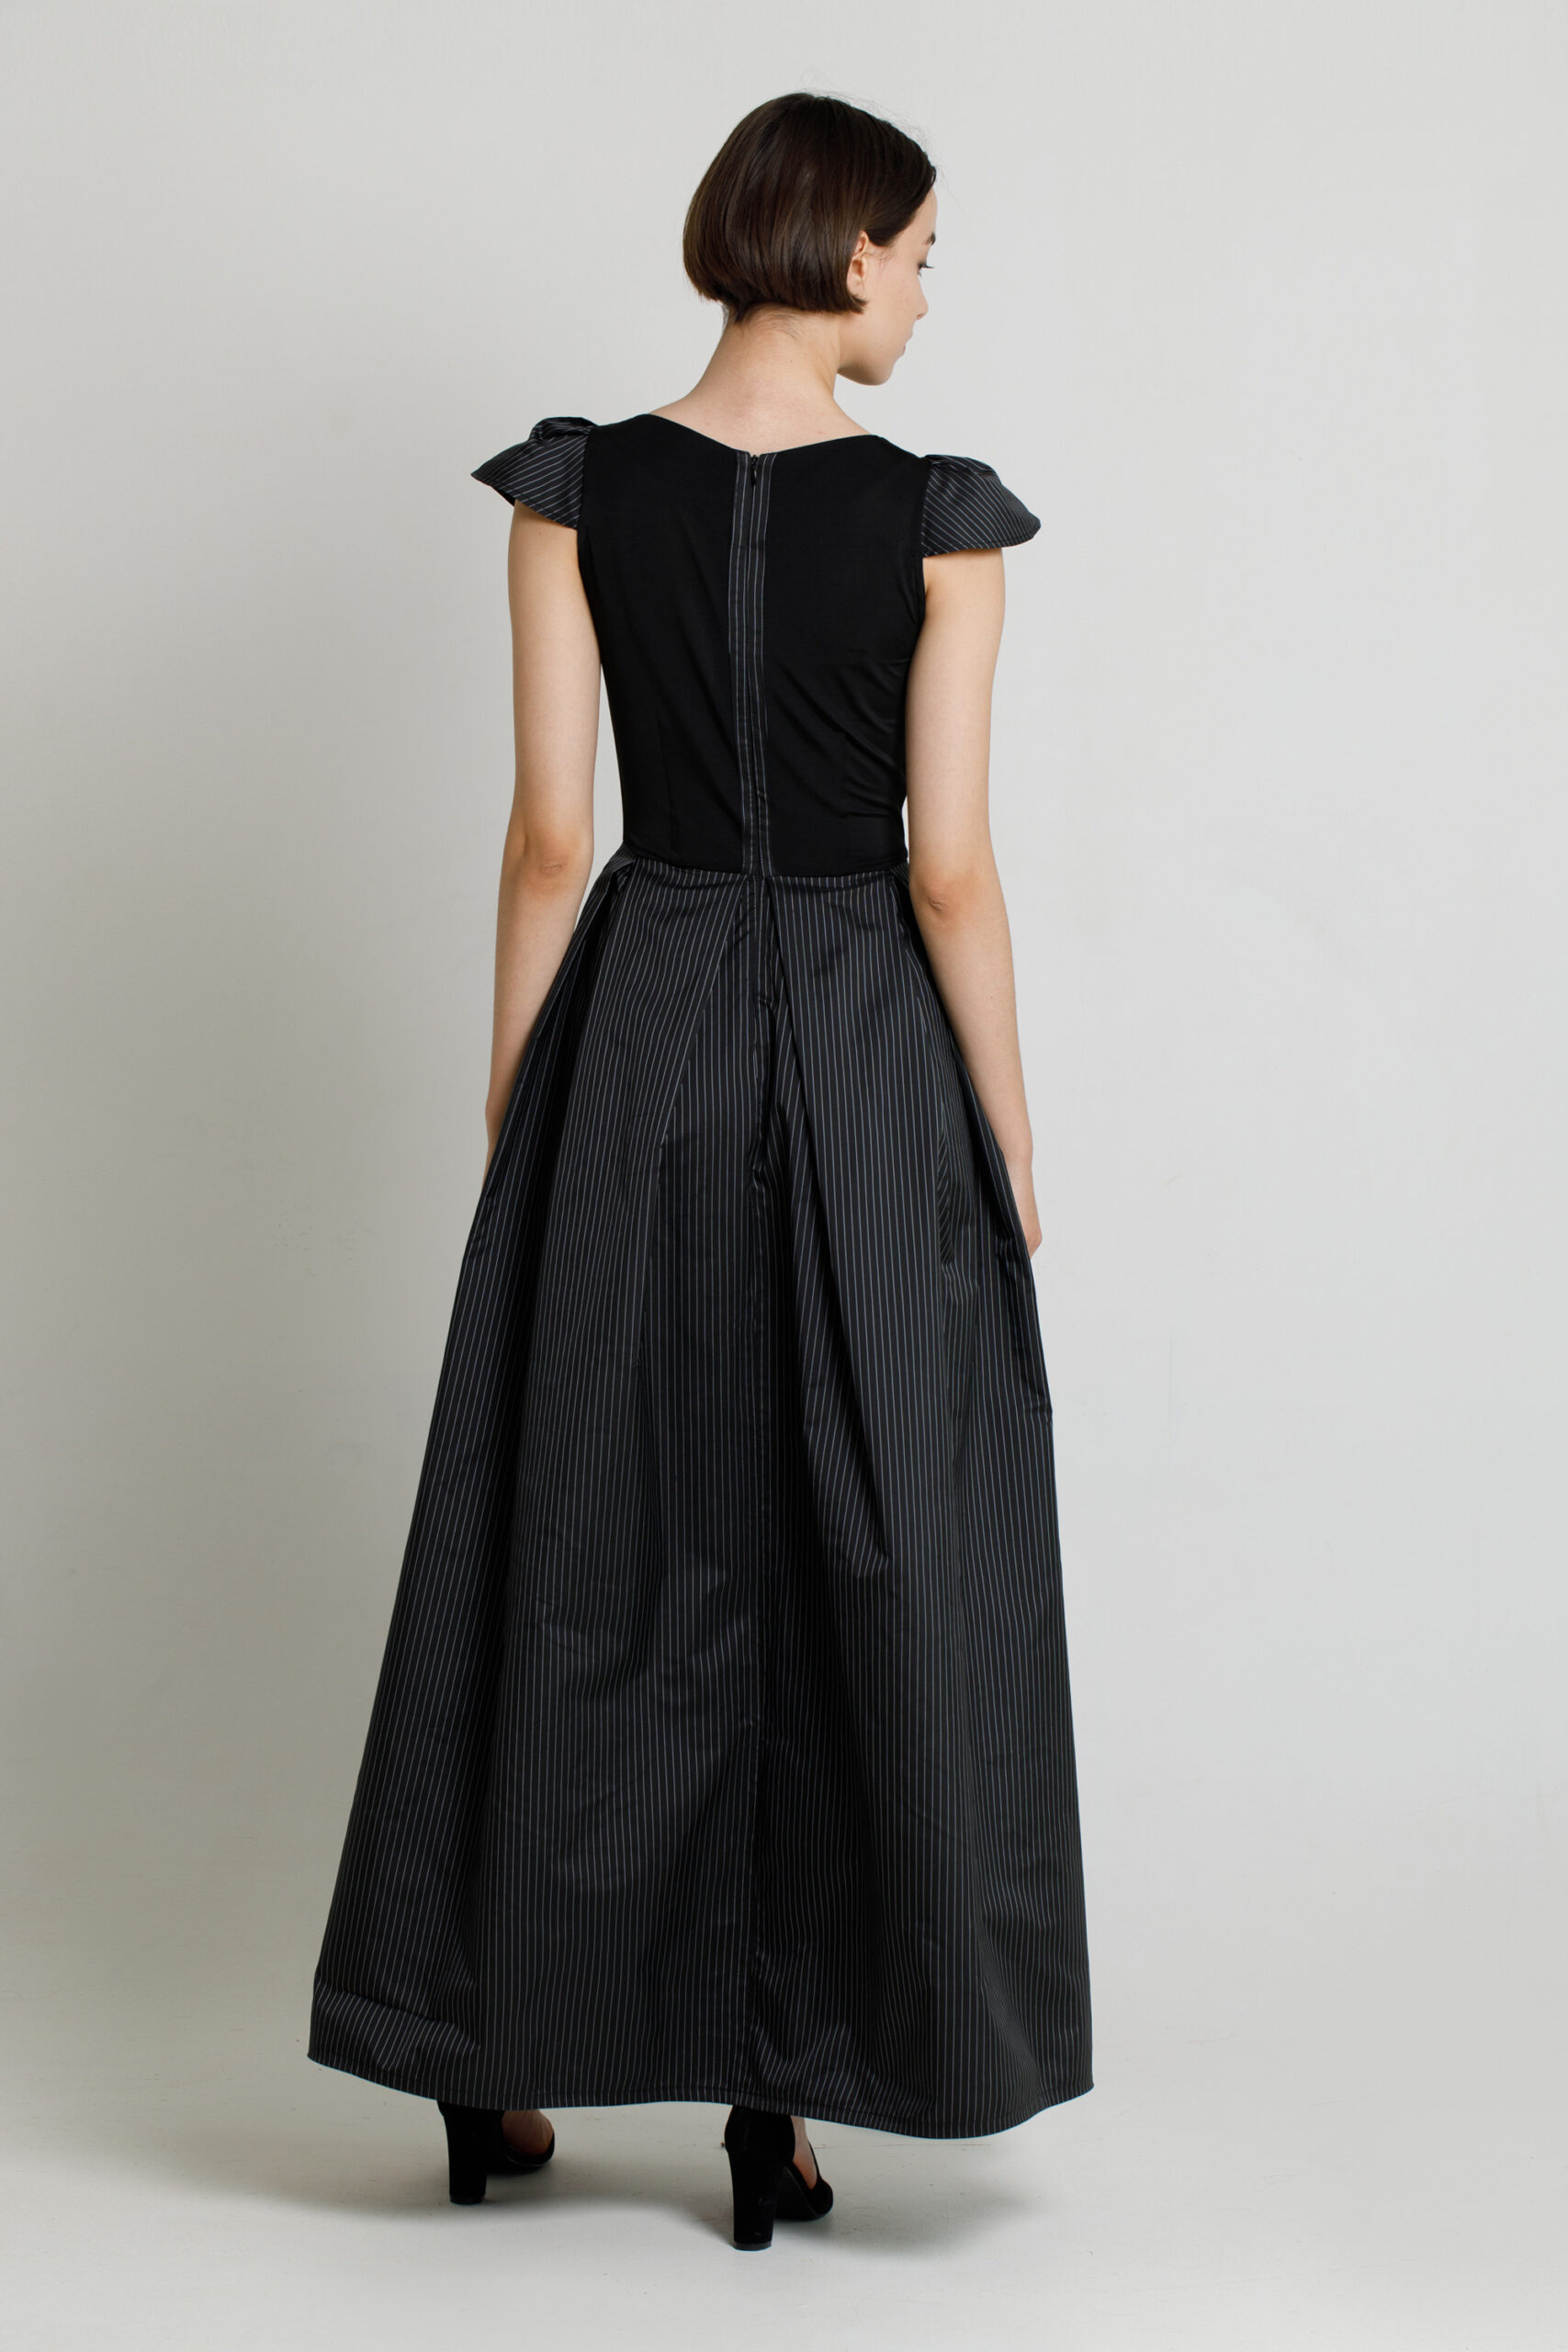 CHLOE elegant black taffeta and organza dress. Natural fabrics, original design, handmade embroidery